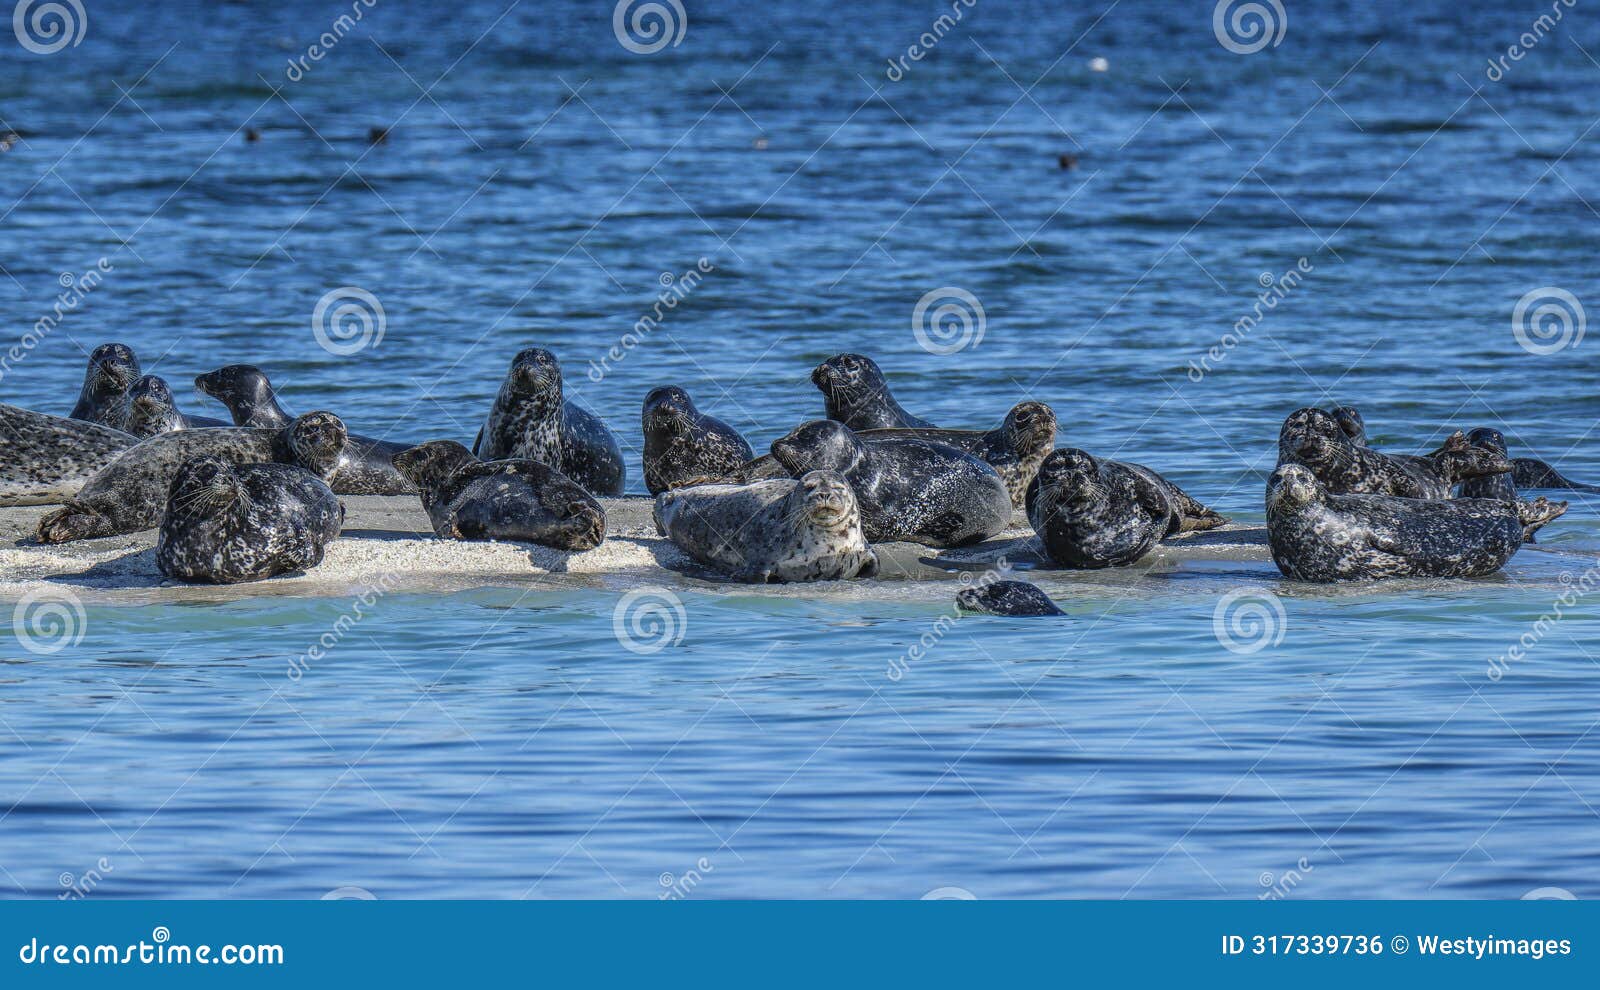 harbour seals (phoca vitulina) hauled out on rocks